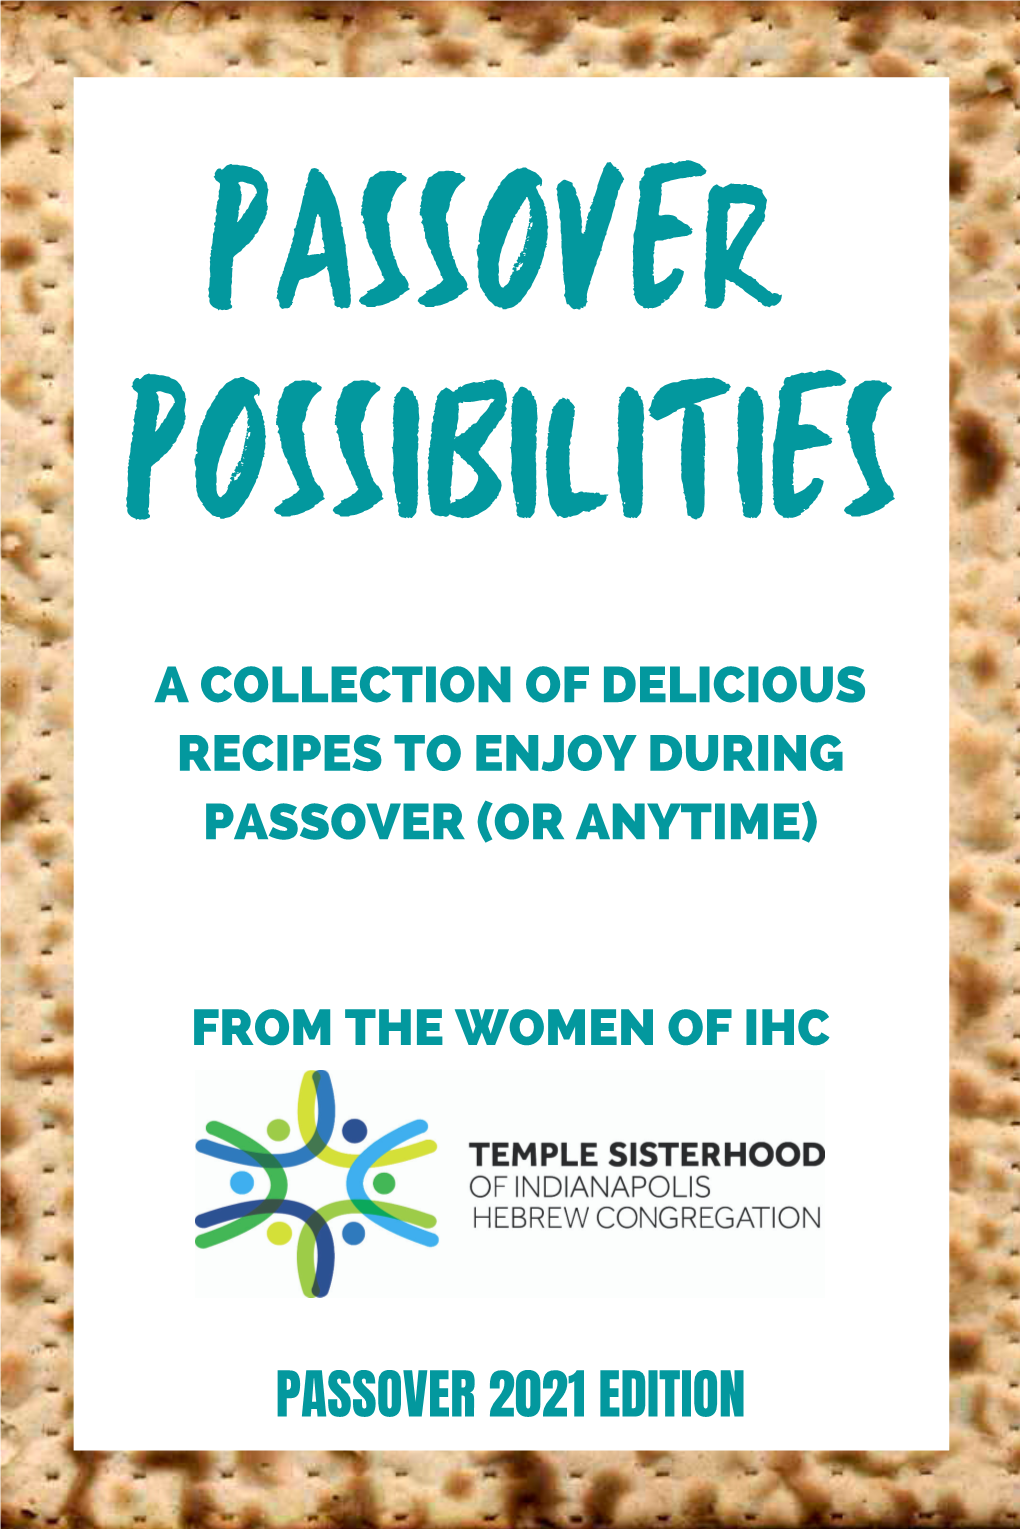 Passover 2021 Edition Passover Possibilities